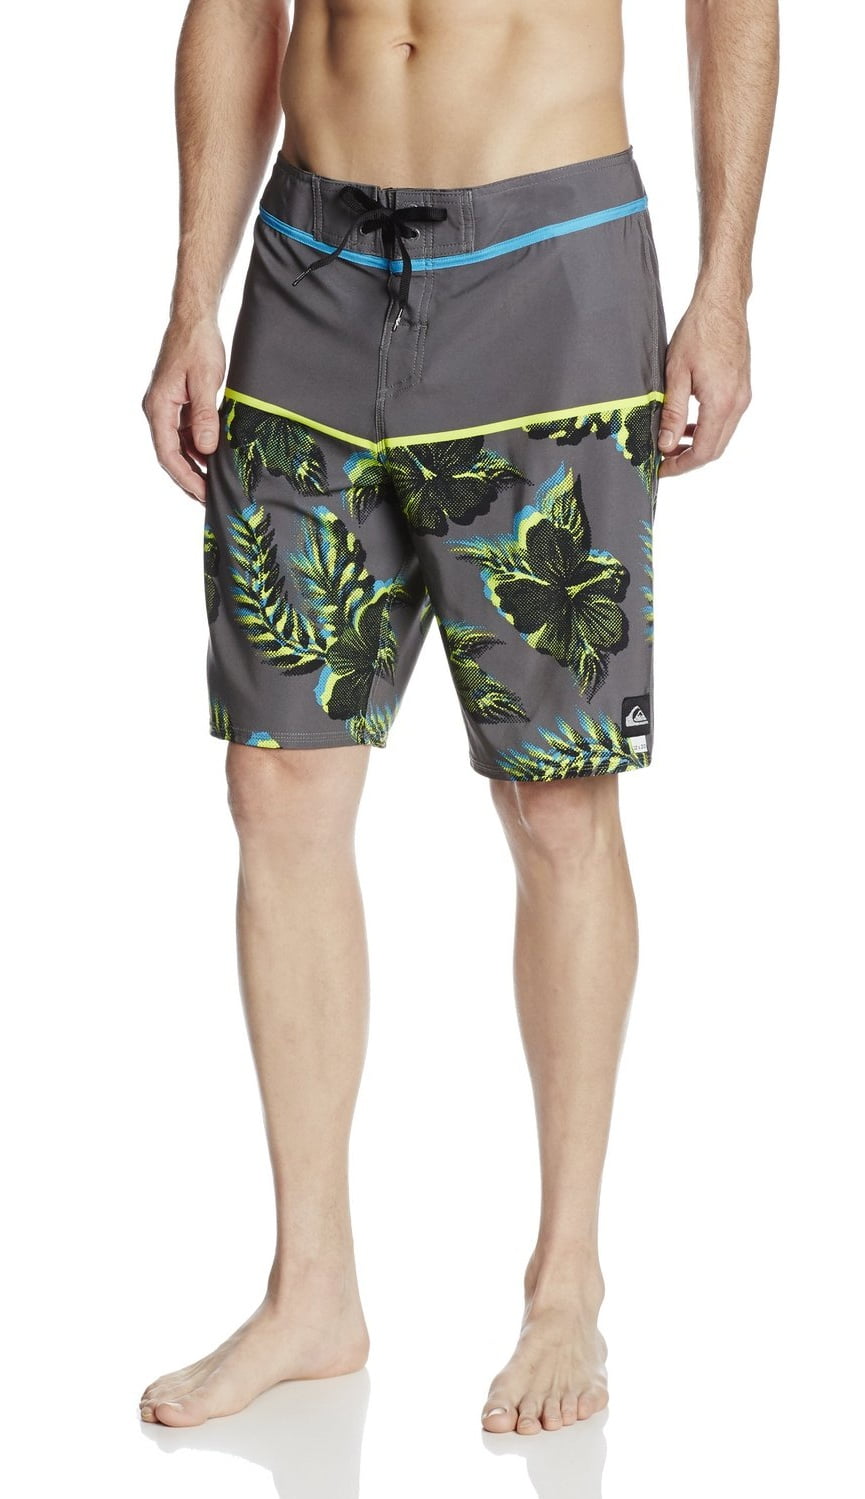 Quiksilver - Quiksilver Men's Tropical Board Shorts - Walmart.com ...